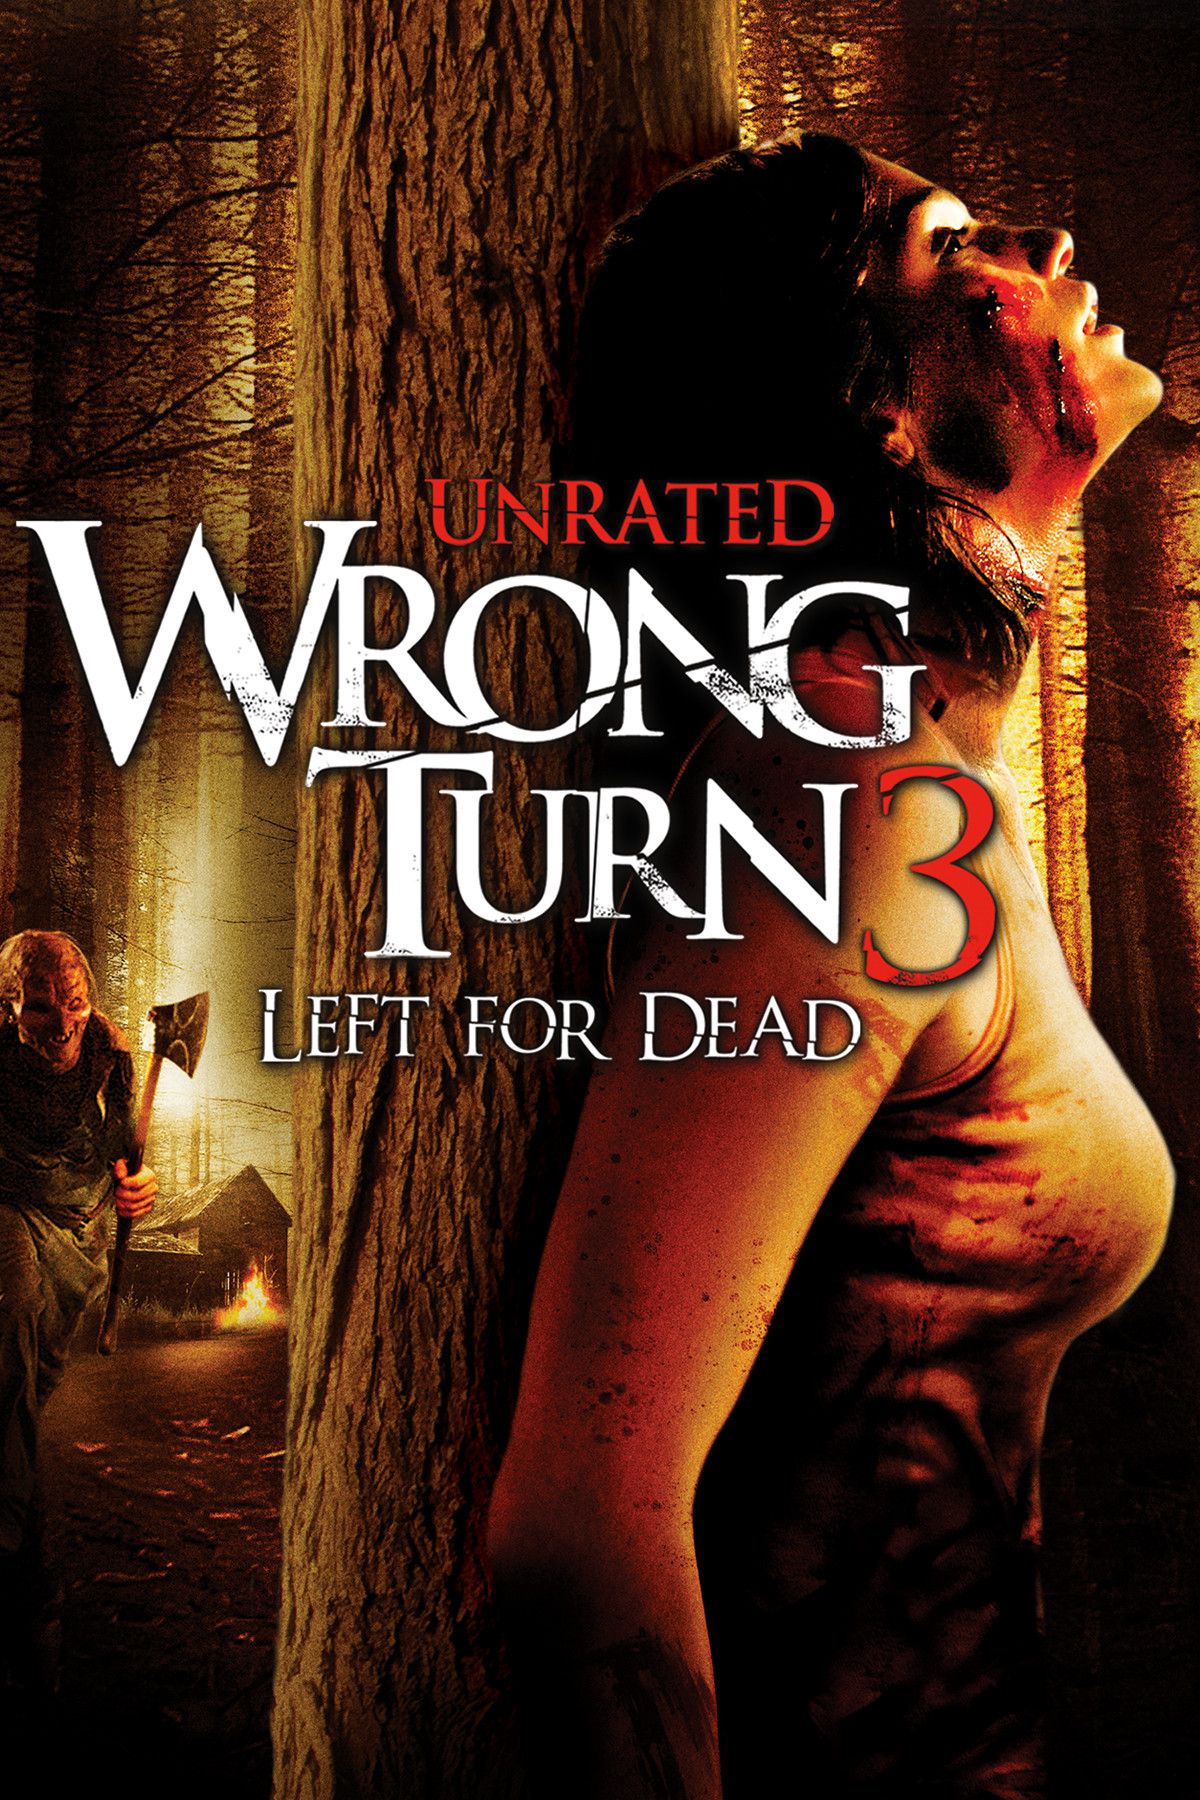 Wrong turn 3 full movie download 480p